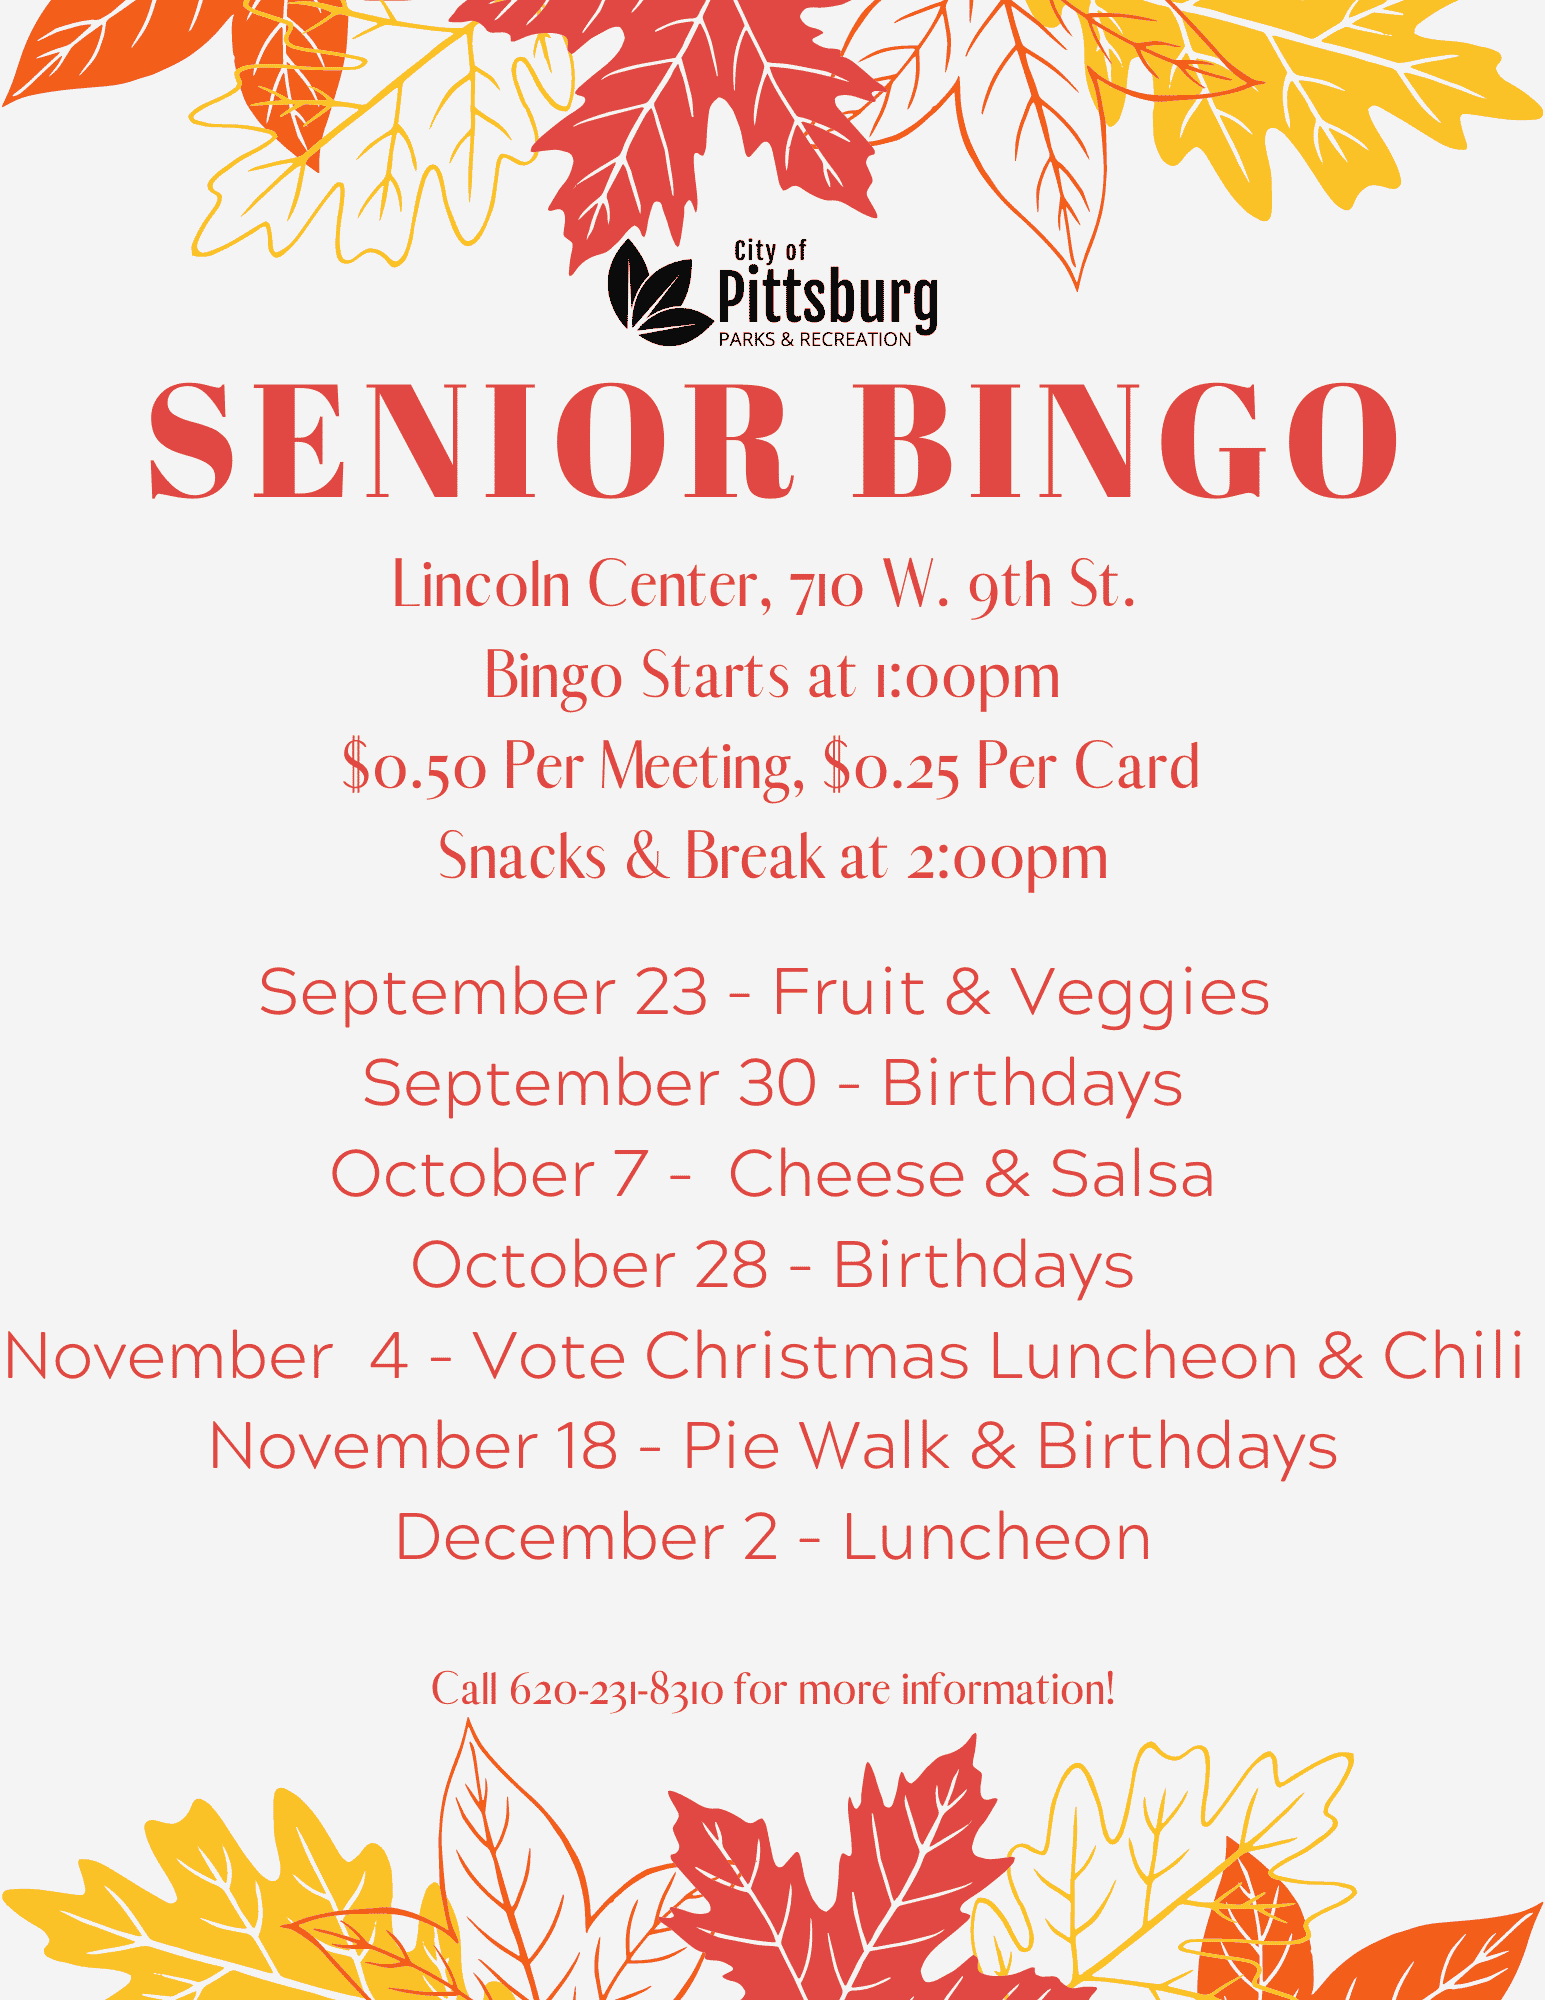 Senior bingo flyer